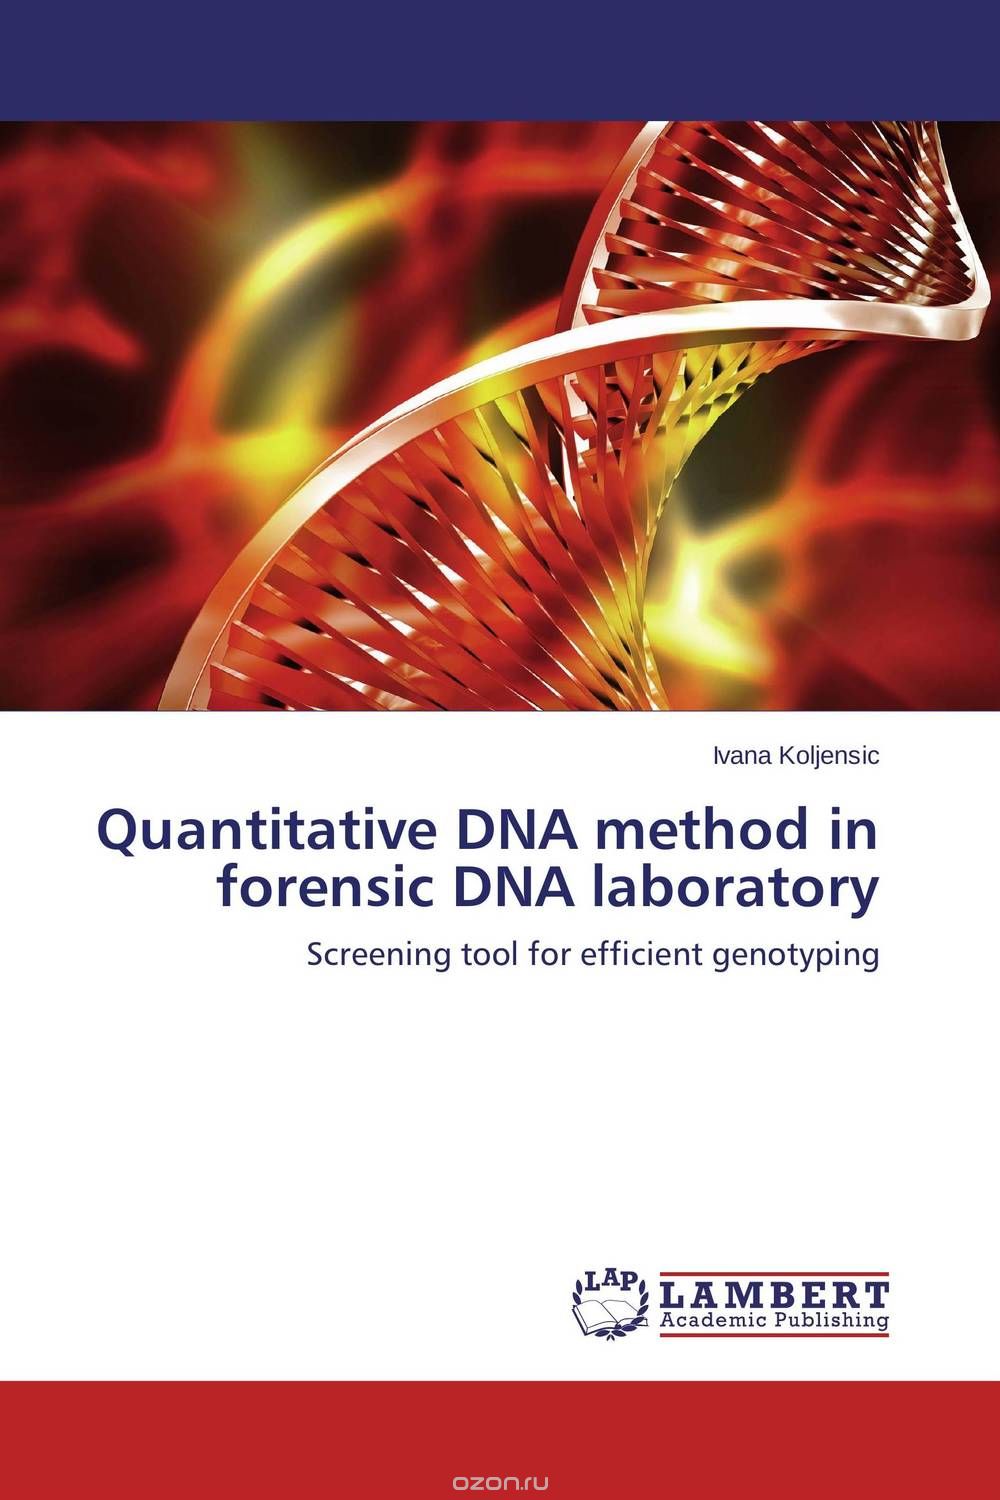 Скачать книгу "Quantitative DNA method in forensic DNA laboratory"